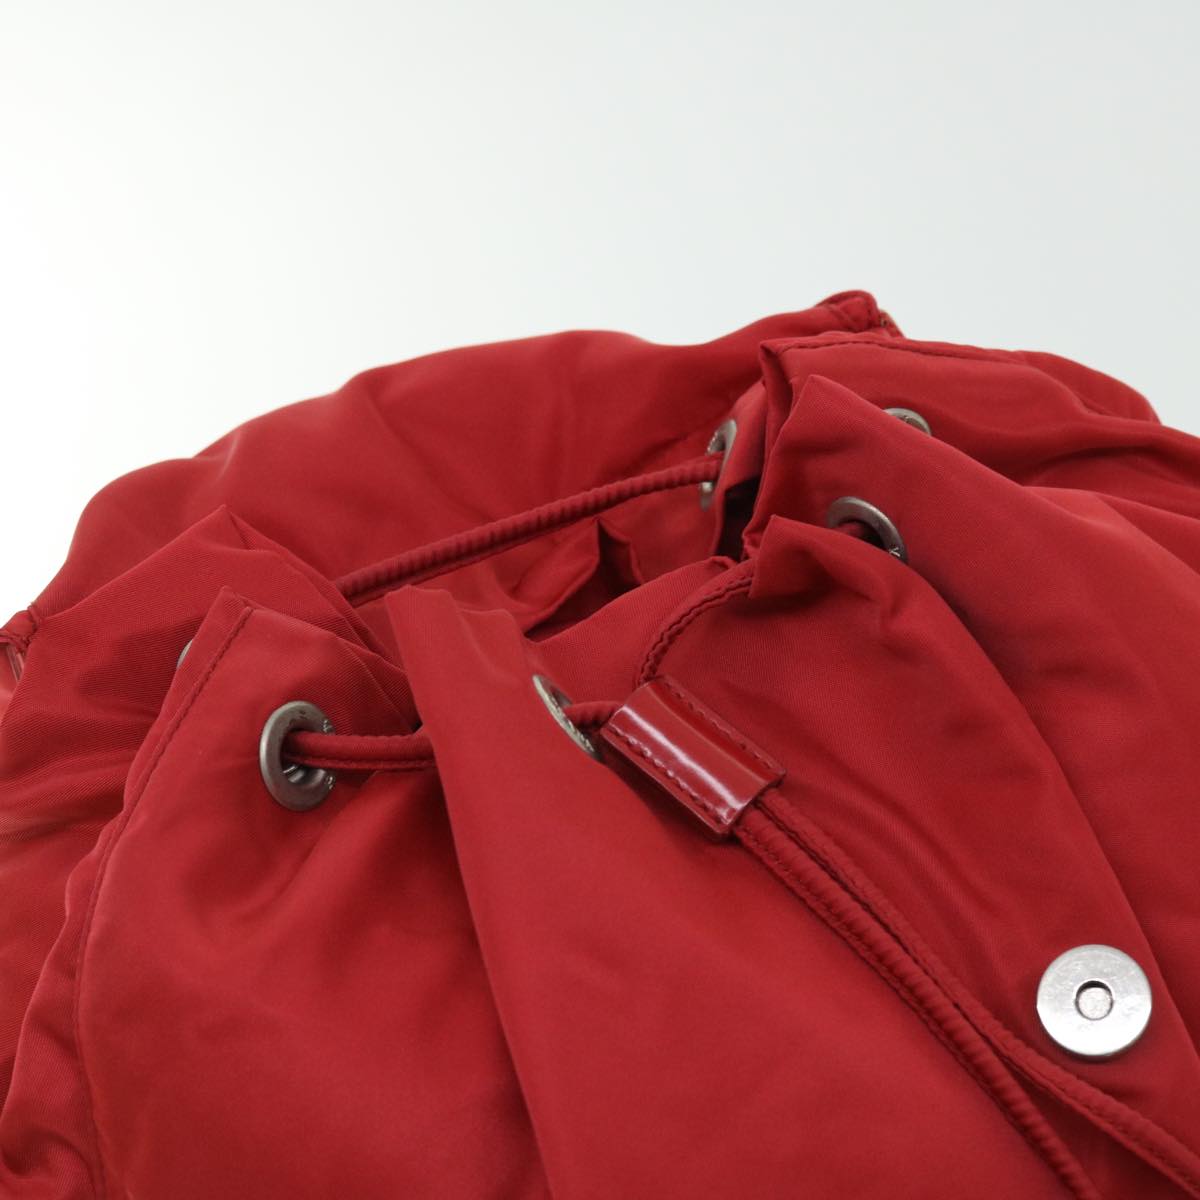 PRADA Backpack Nylon Red Auth 51021